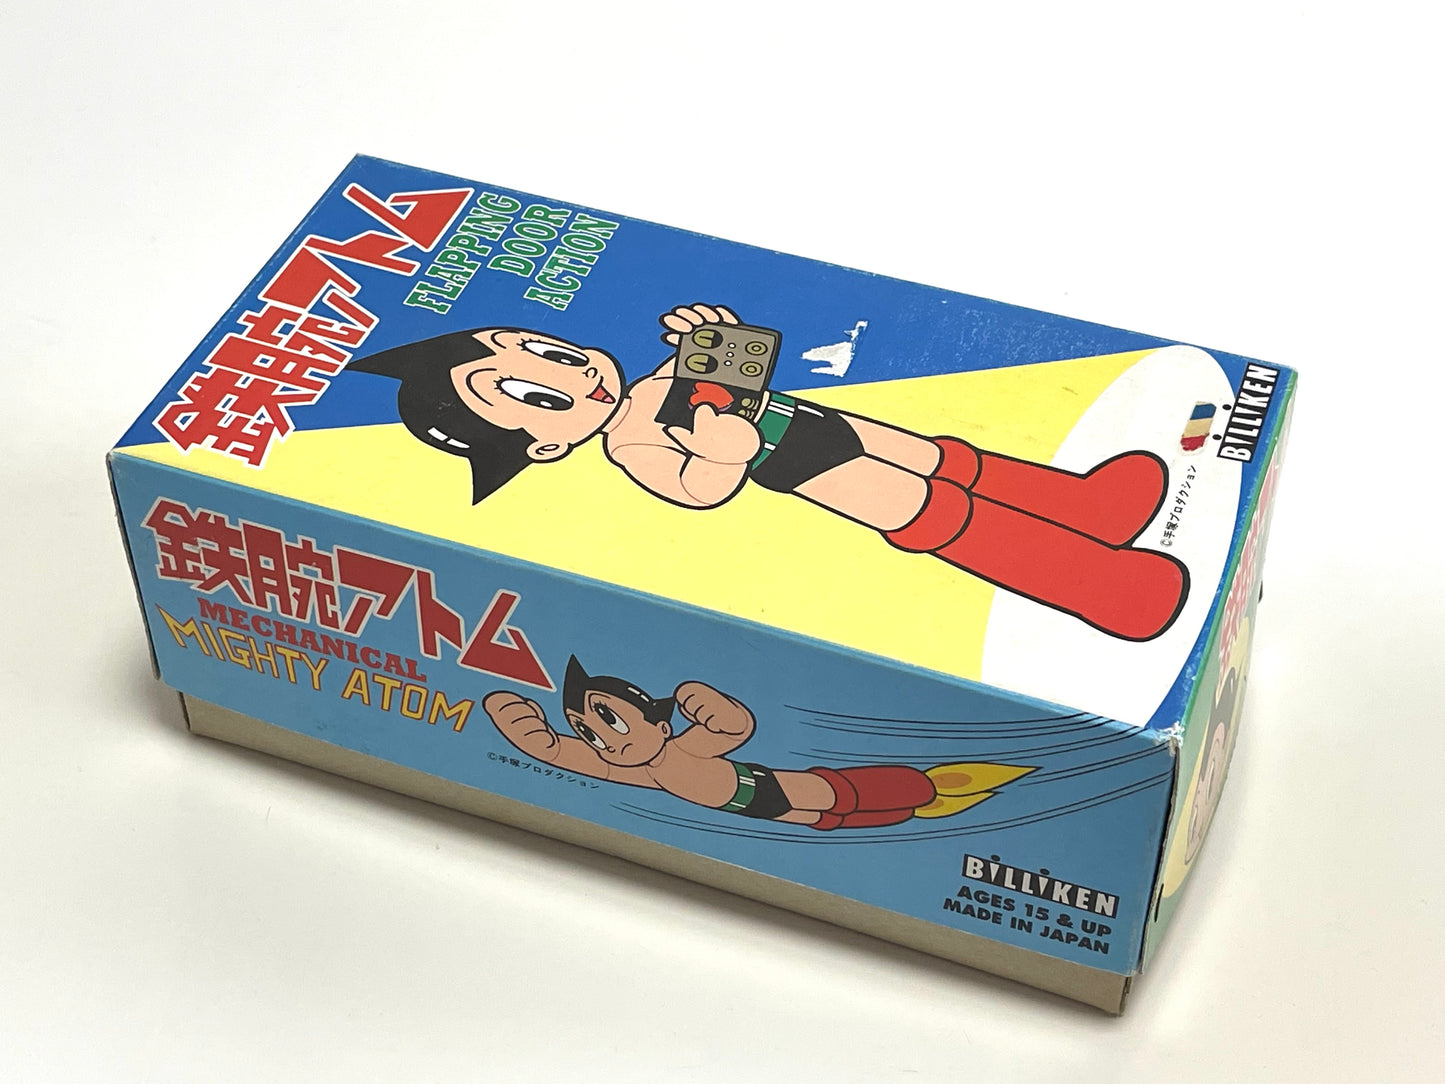 Japanese Retro Anime Astroboy Tezuka Osamu Productions Tetsuwan Atom Flapping Door Action Mechanical Action Tin Toy